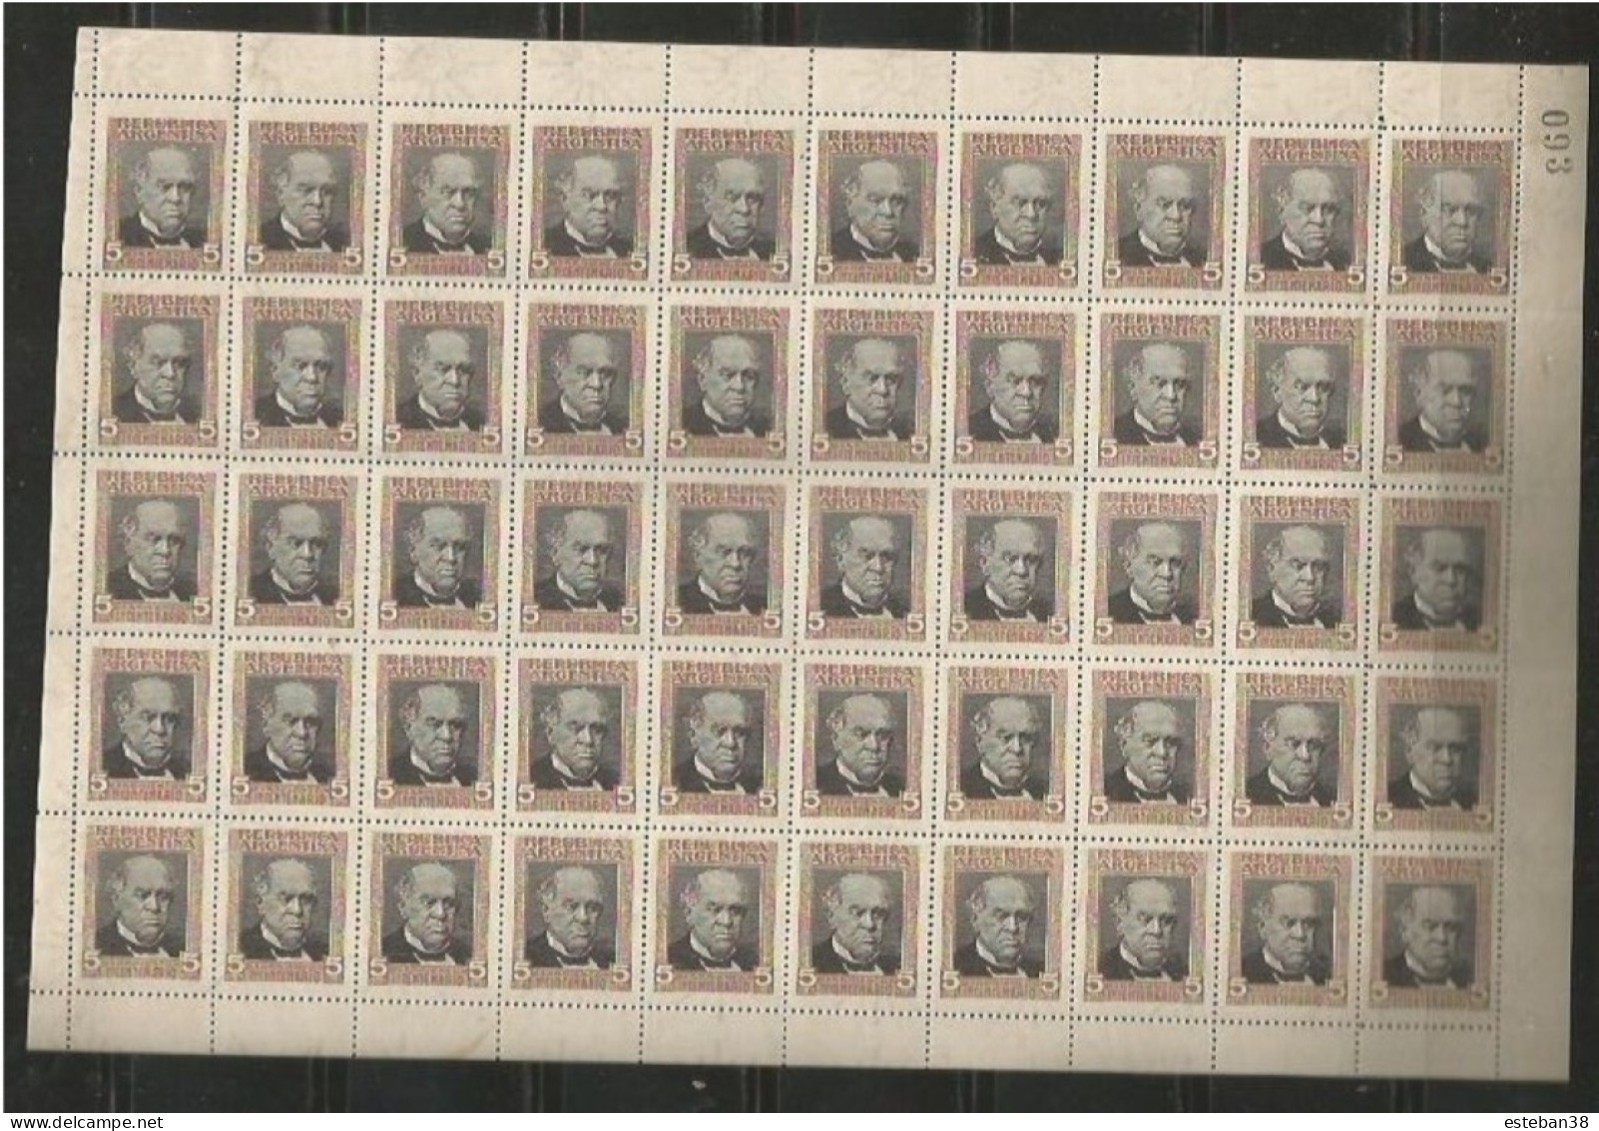 Centenario Domingo Faustino Sarmiento - Unused Stamps